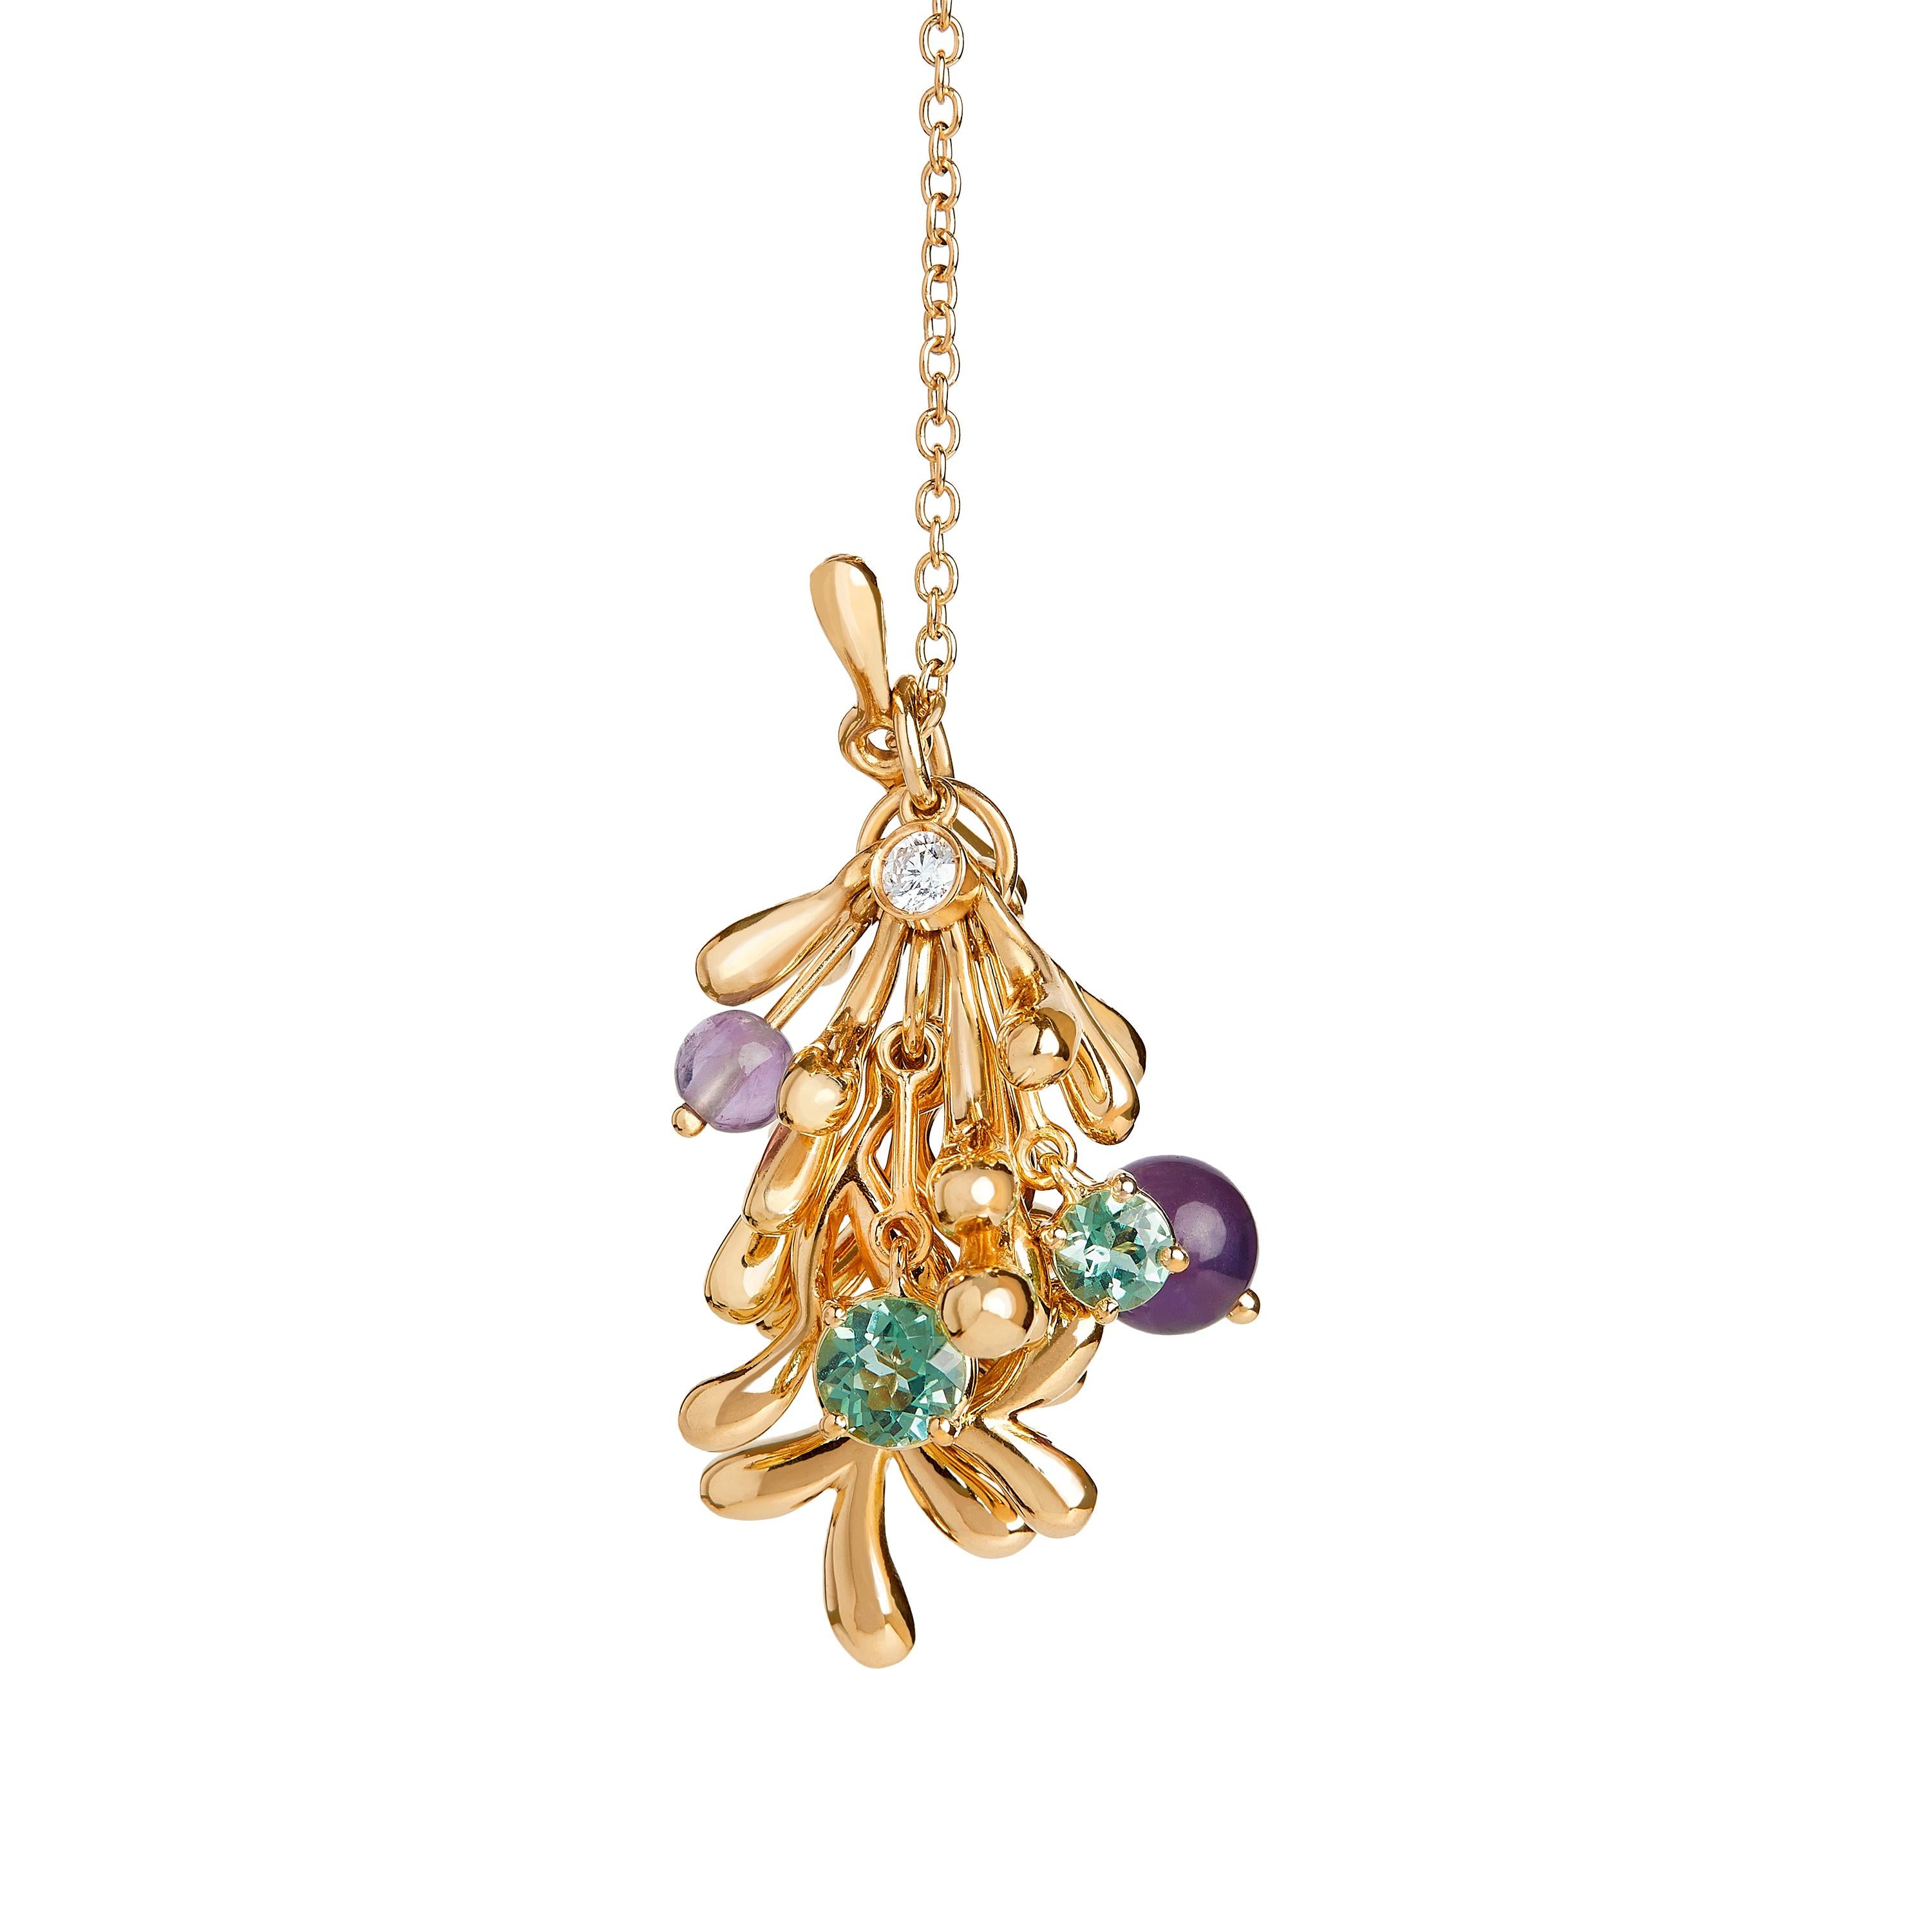 Nathalie Jean Contemporary Diamond Tourmaline Amethyst Gold Pendant Necklace For Sale 2